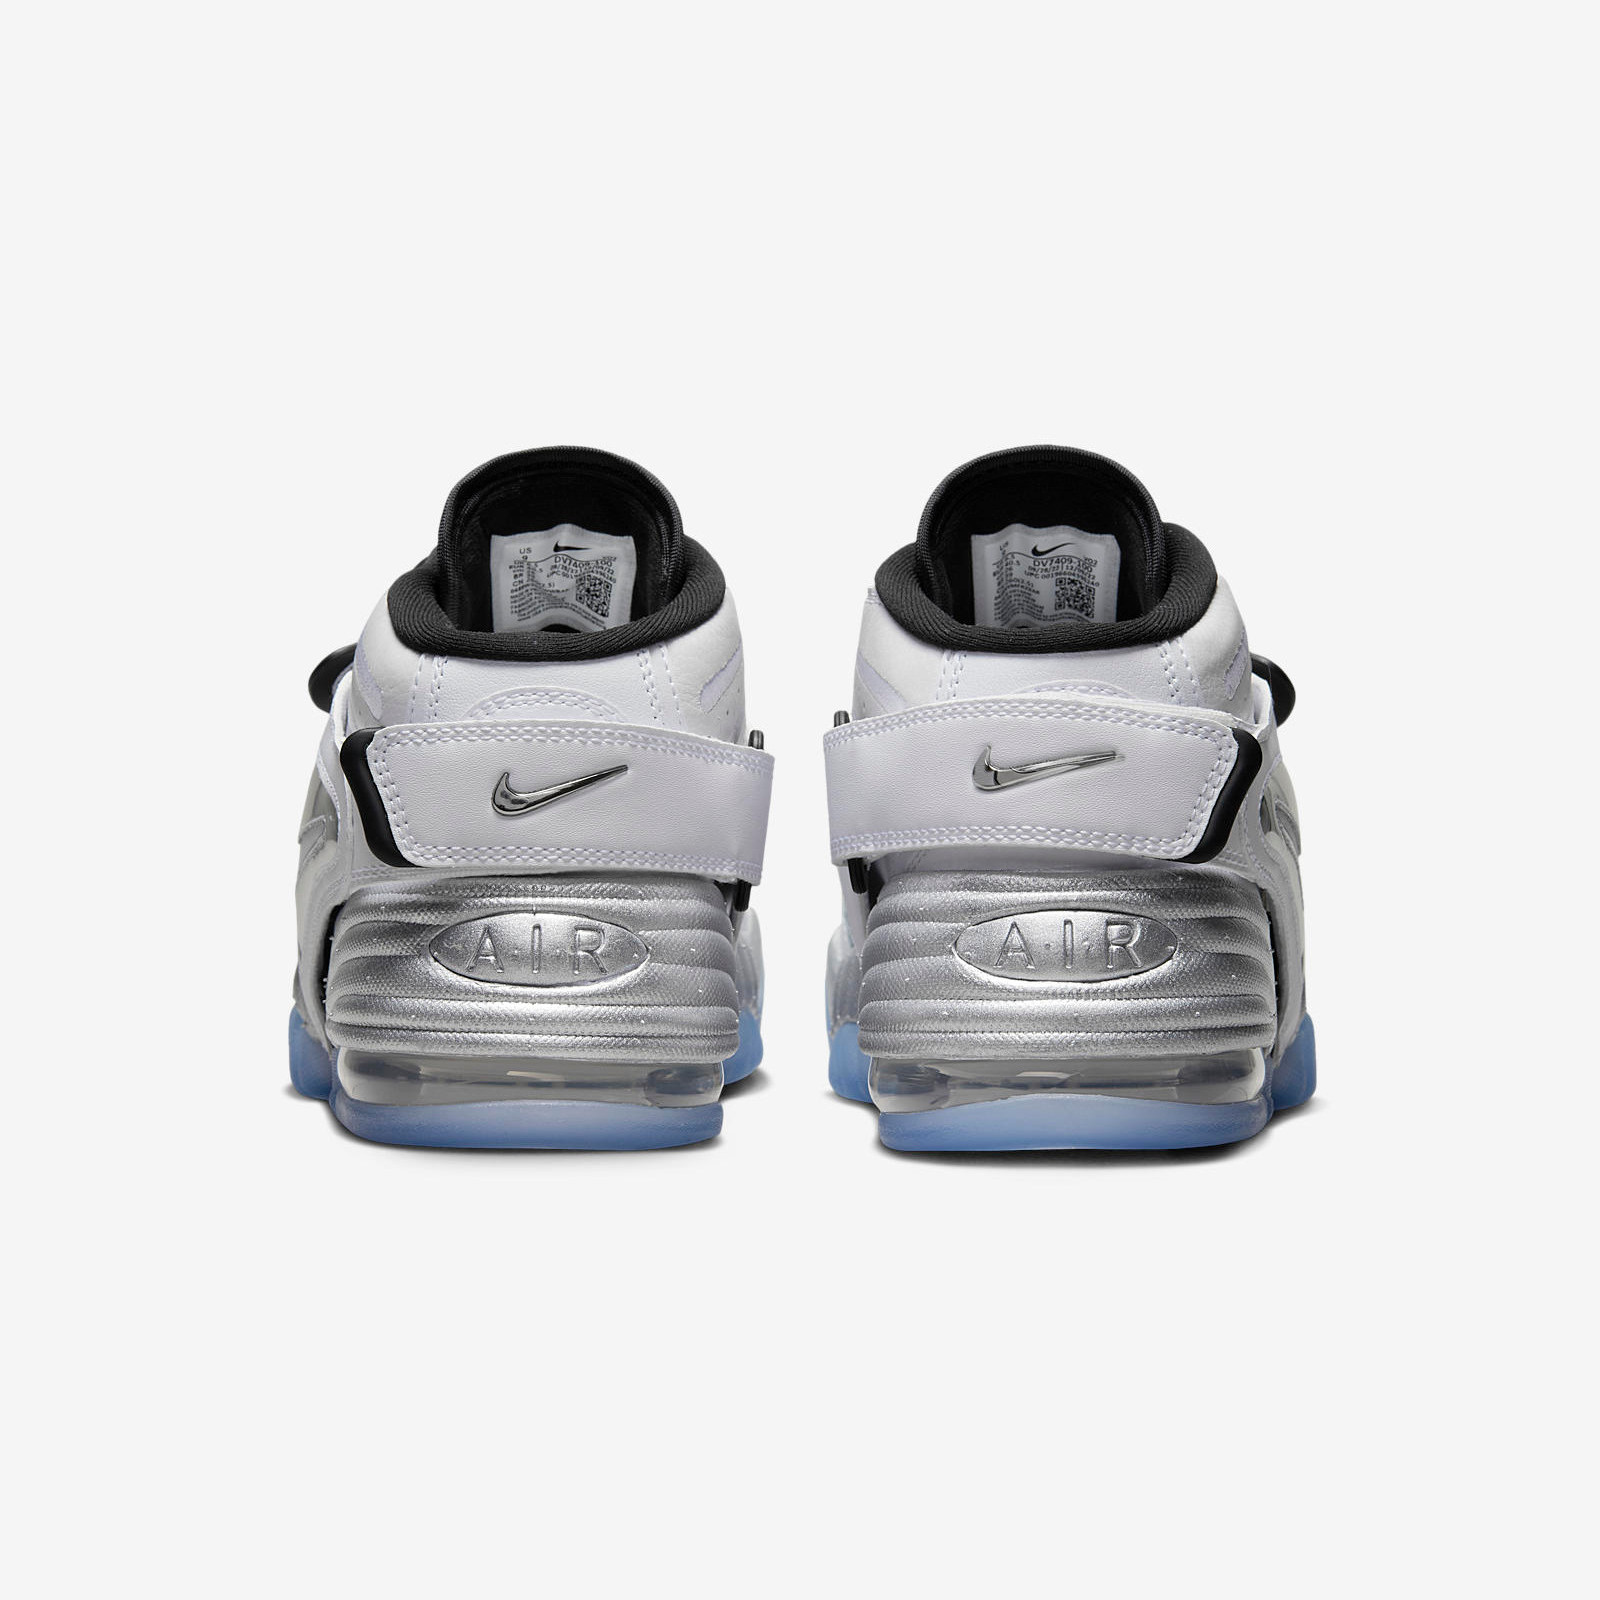 Nike Air Adjust Force
« Metallic Silver »